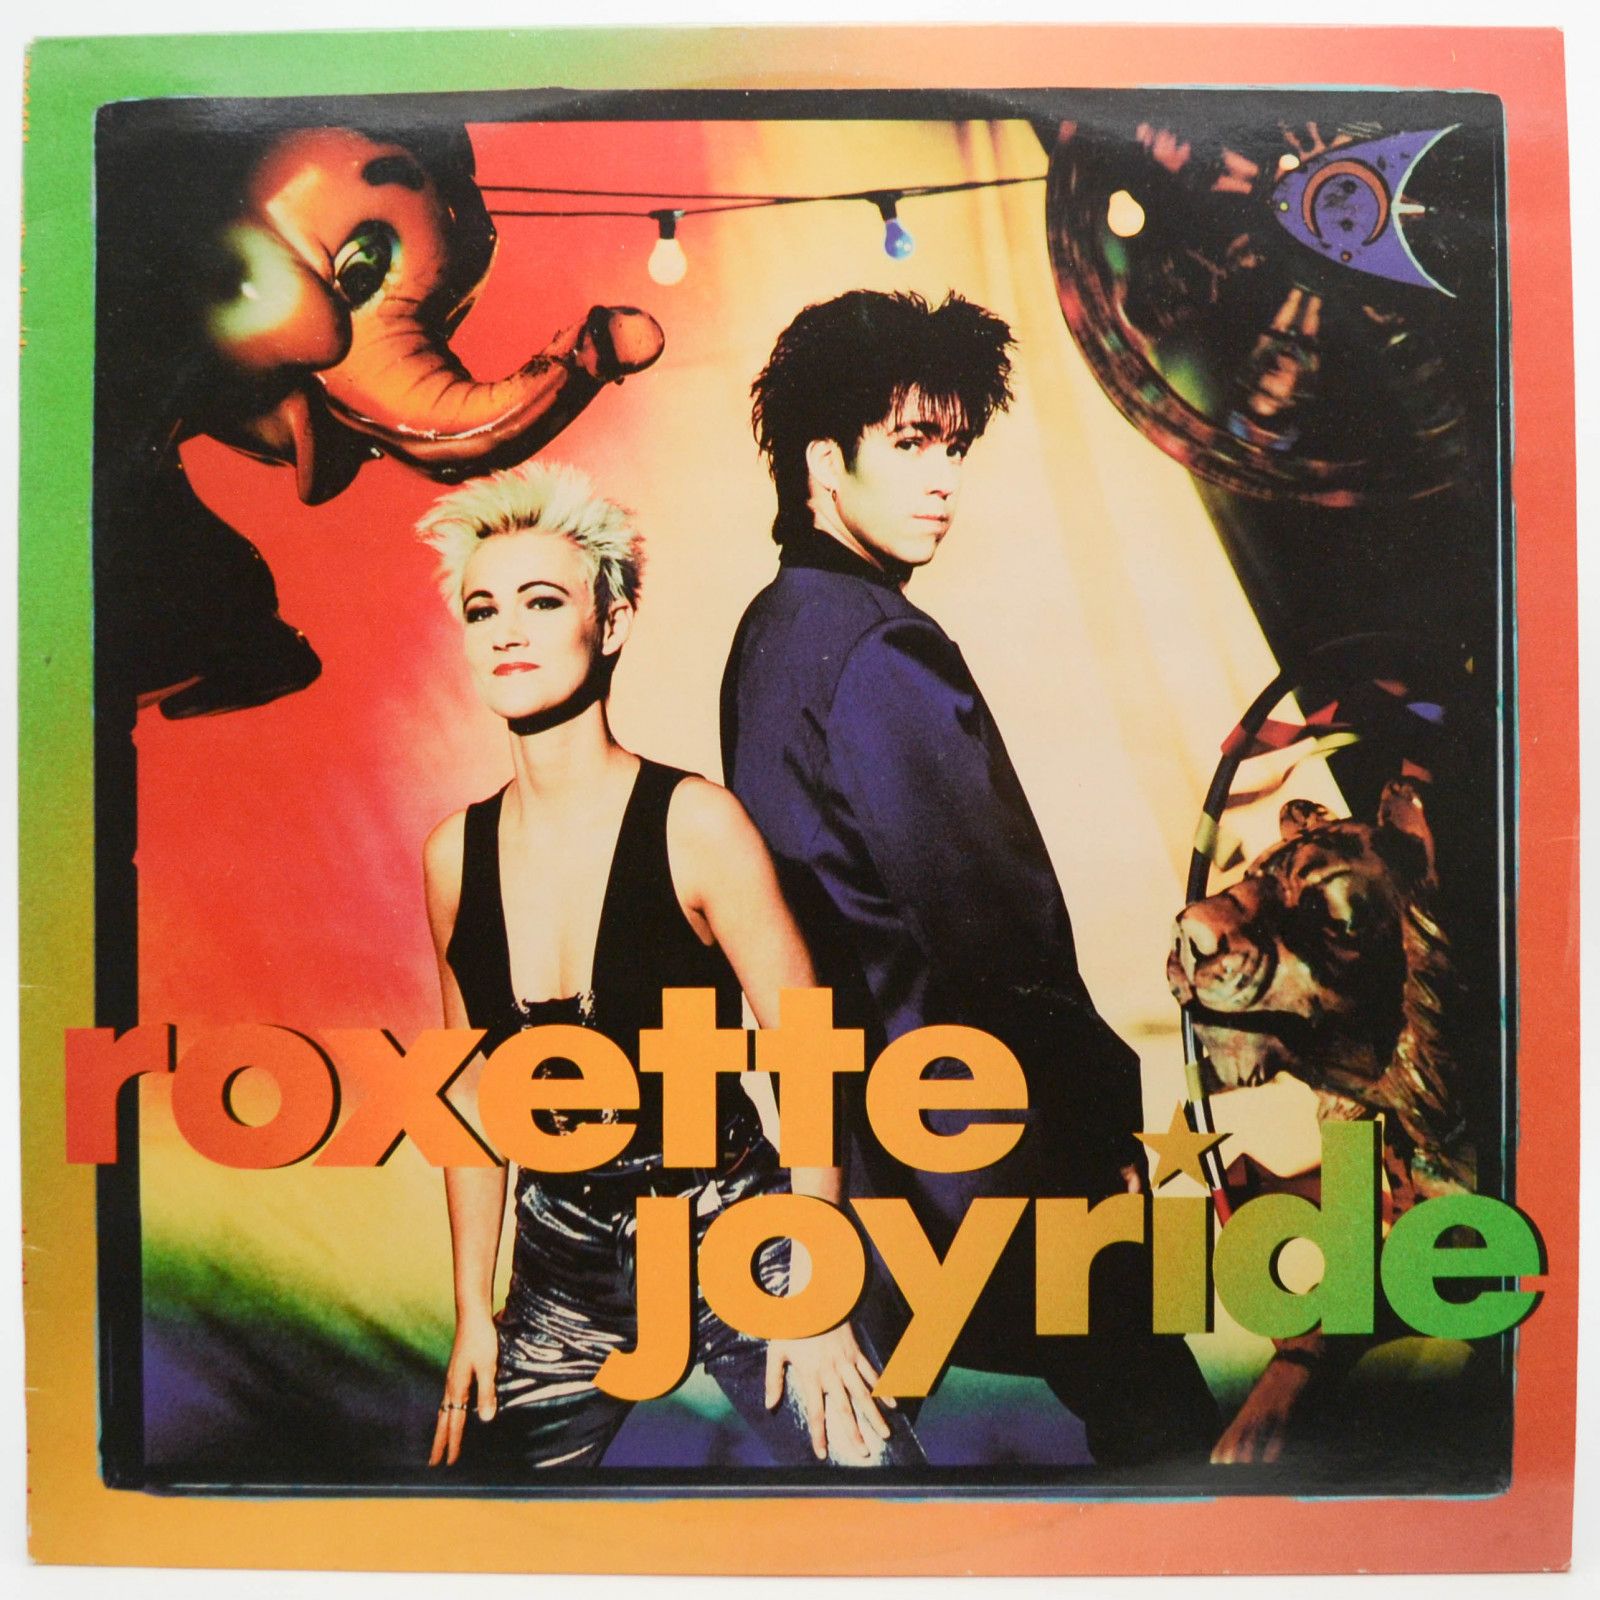 Roxette — Joyride (Sweden), 1991